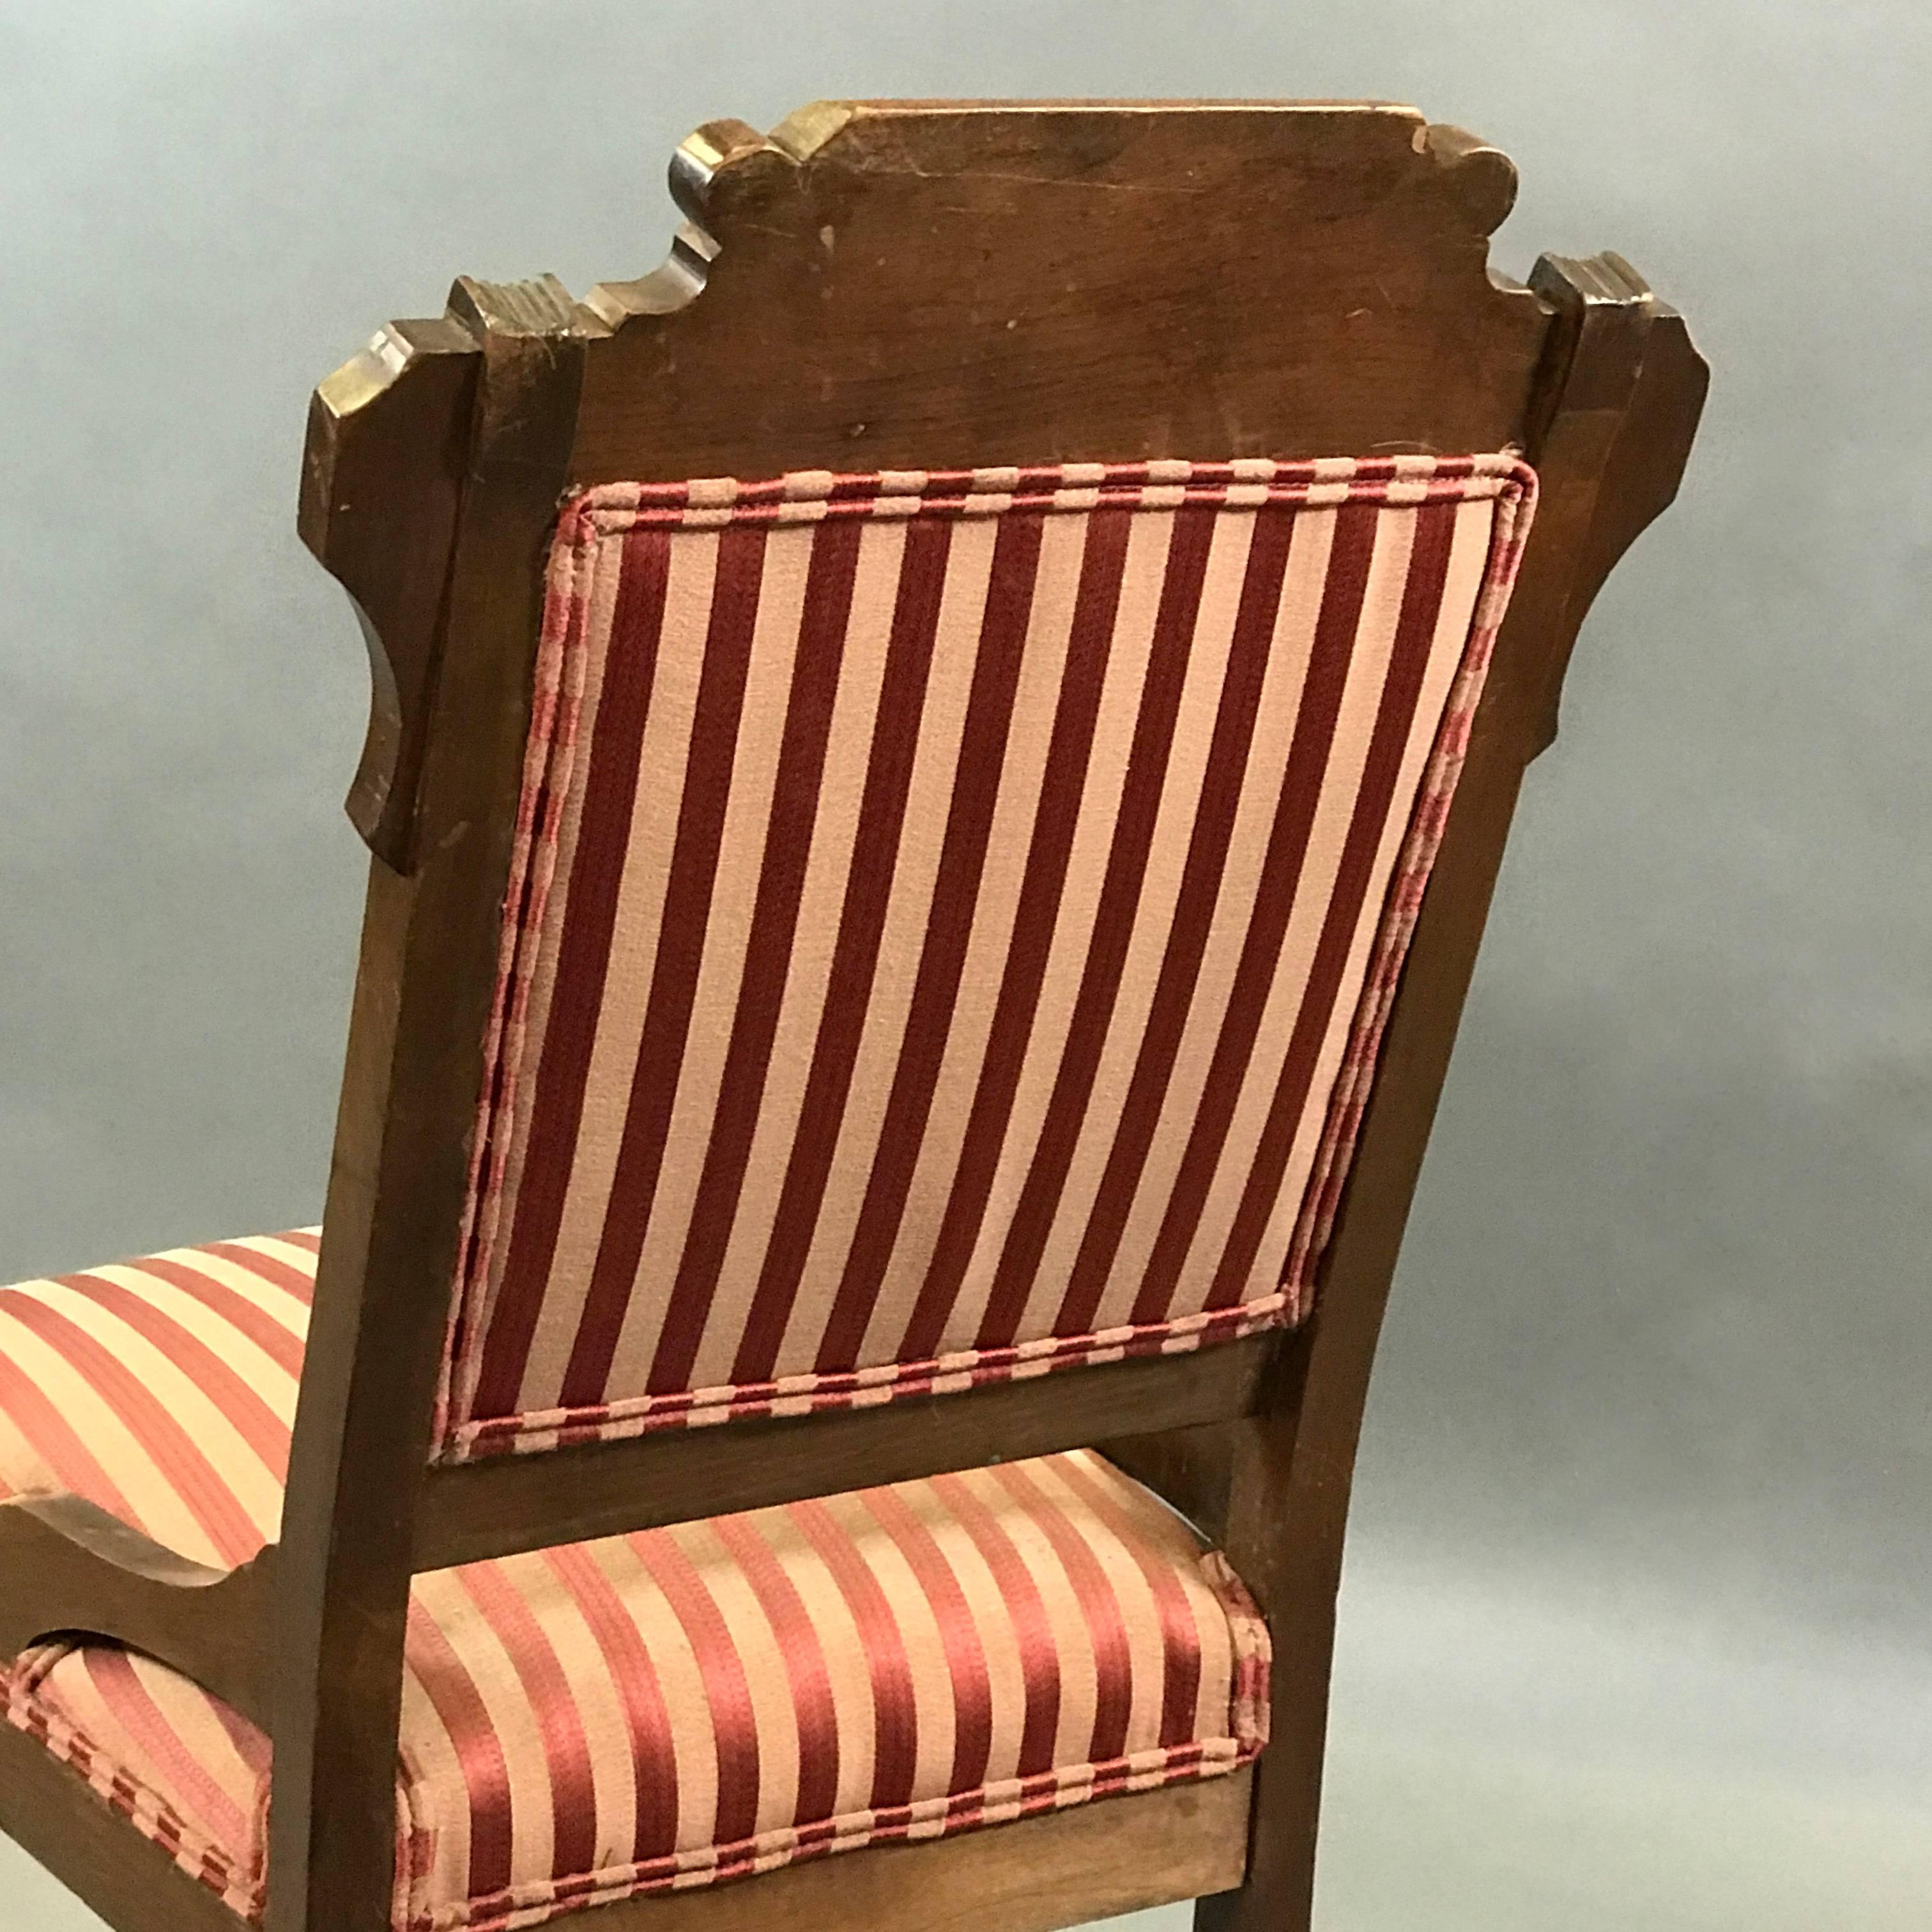 silk upholstered chair